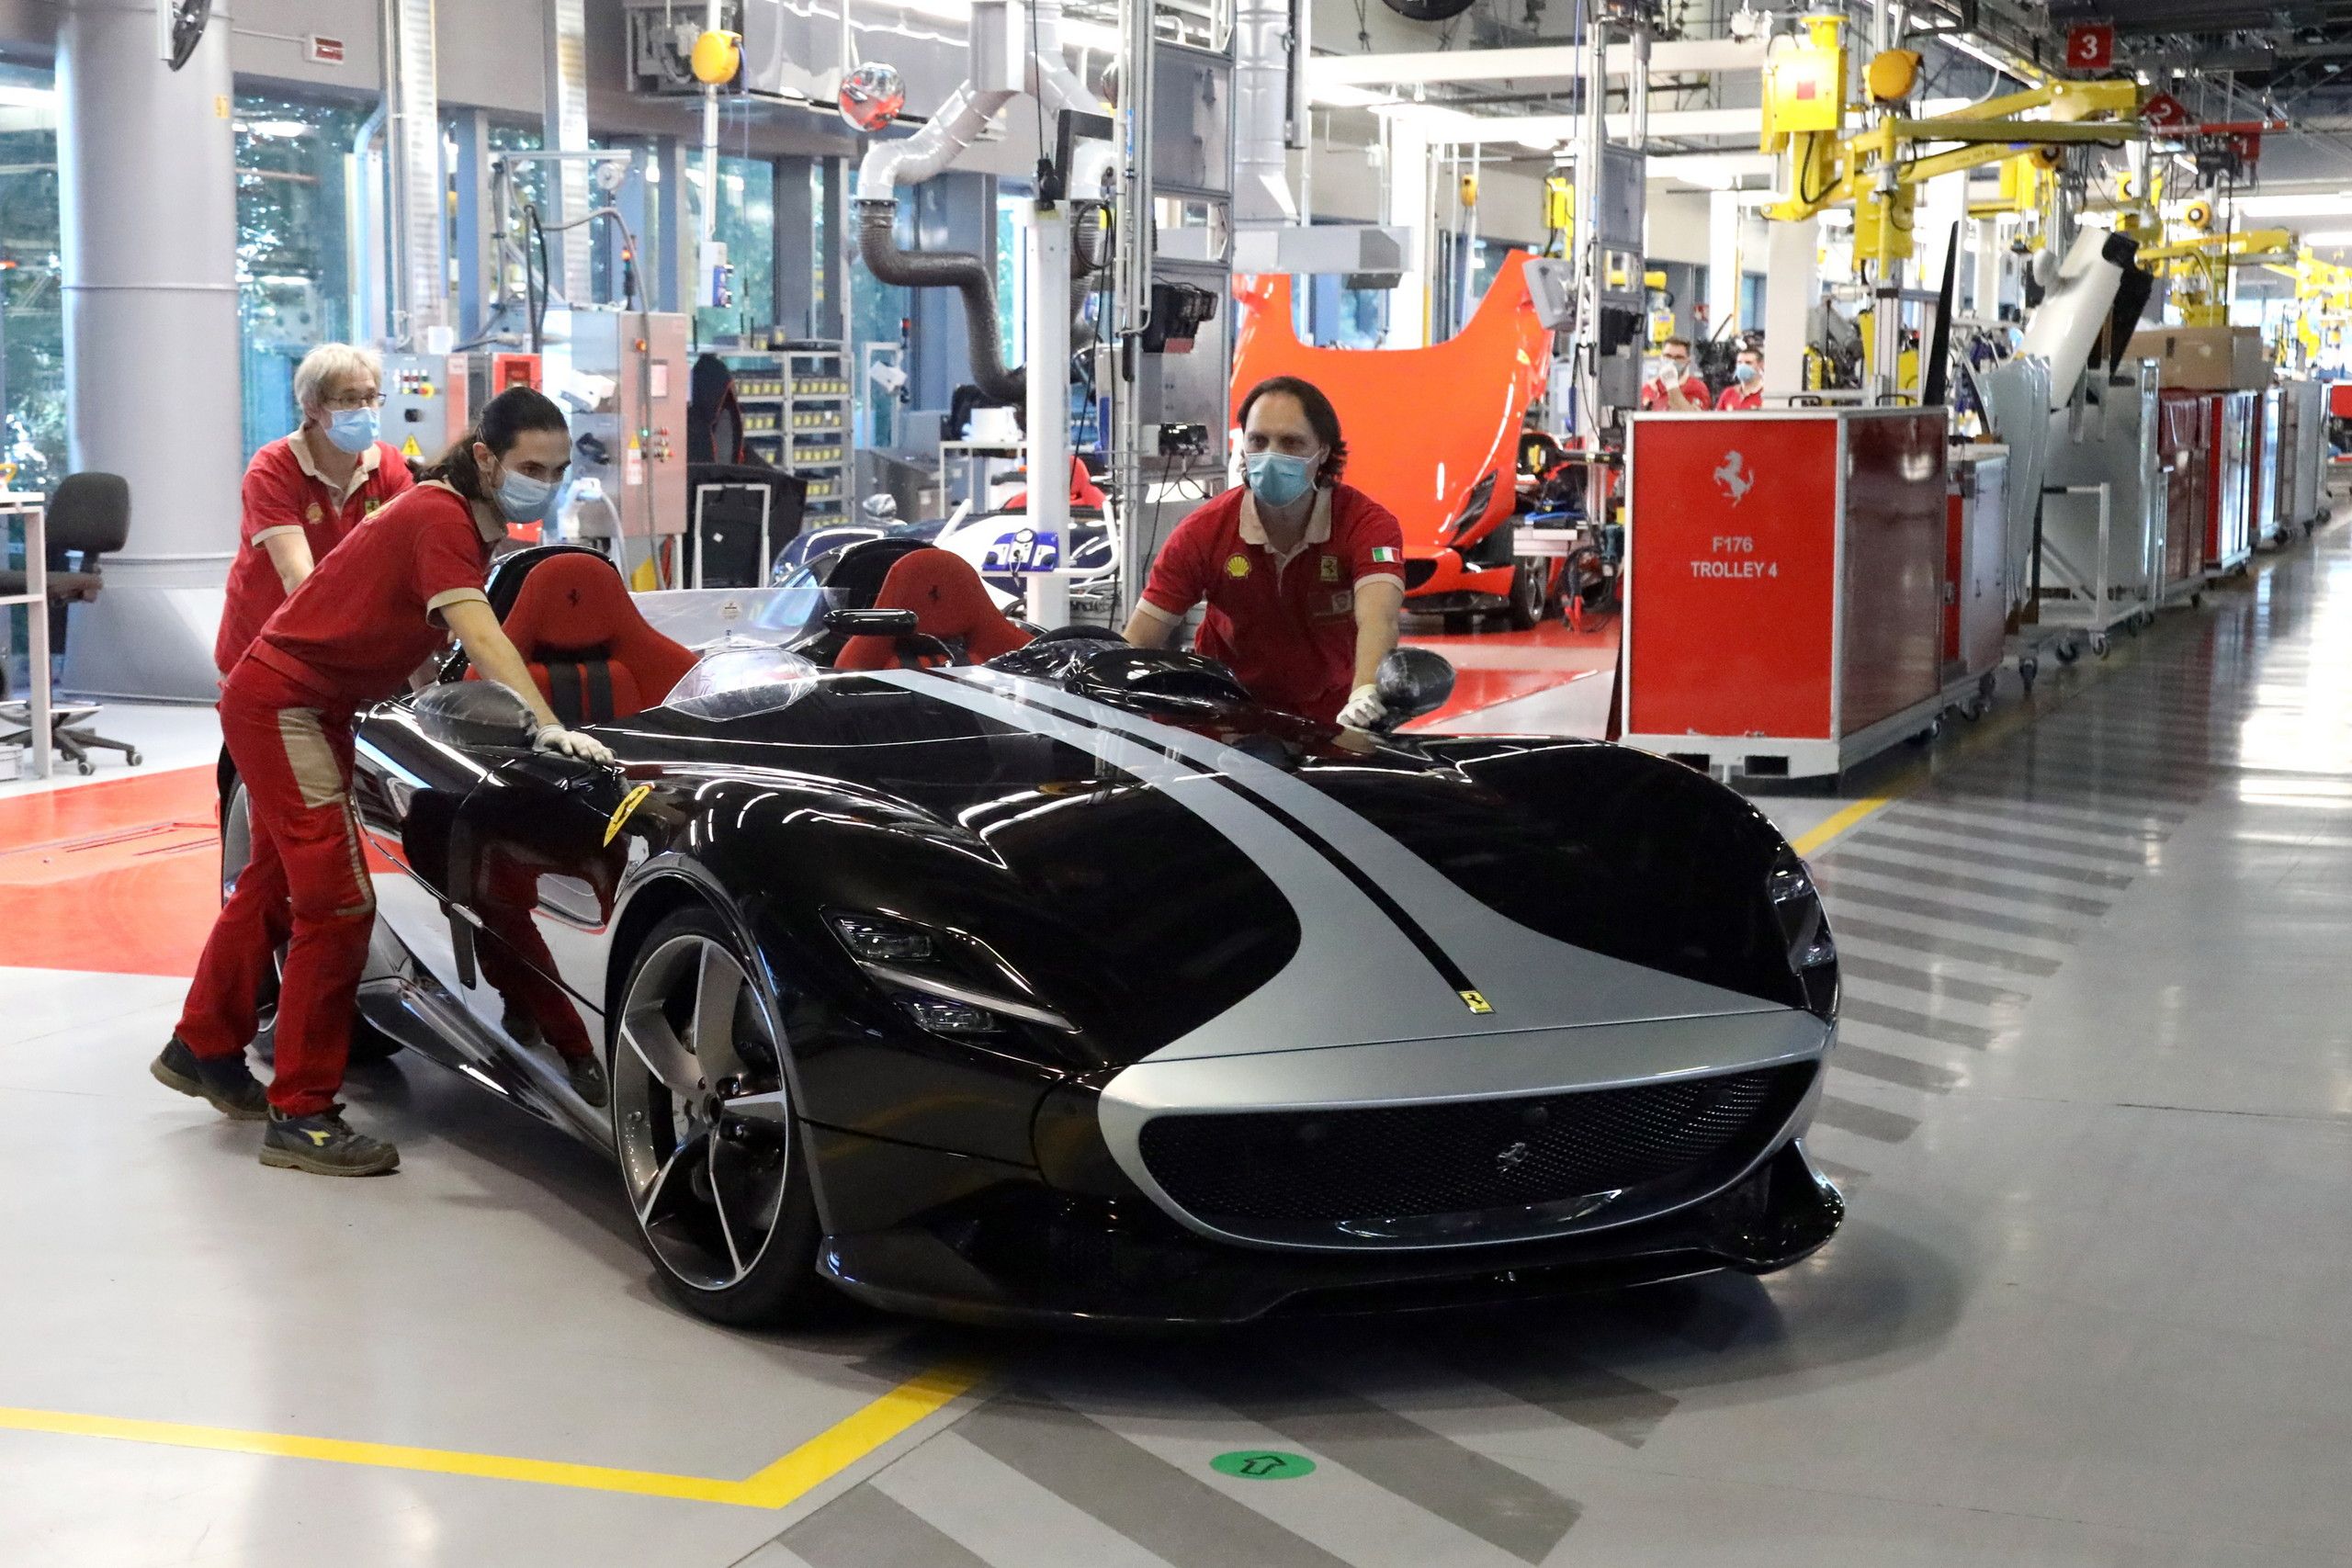 Ferrari Employees working on a Ferrari